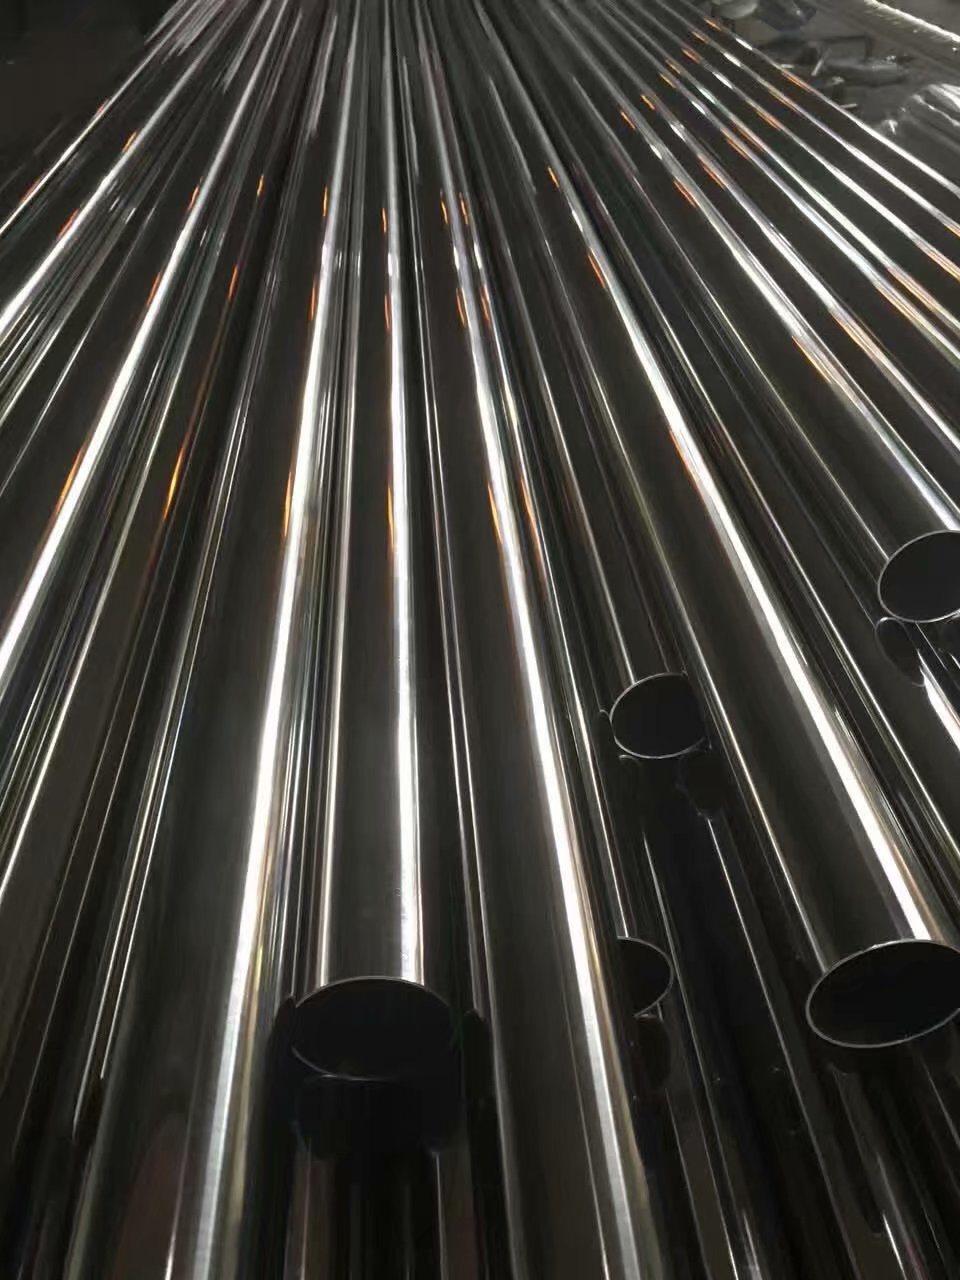 Seamless Alloy Steel Tube Pipe Monel K500 Material Monel 500 Pipe